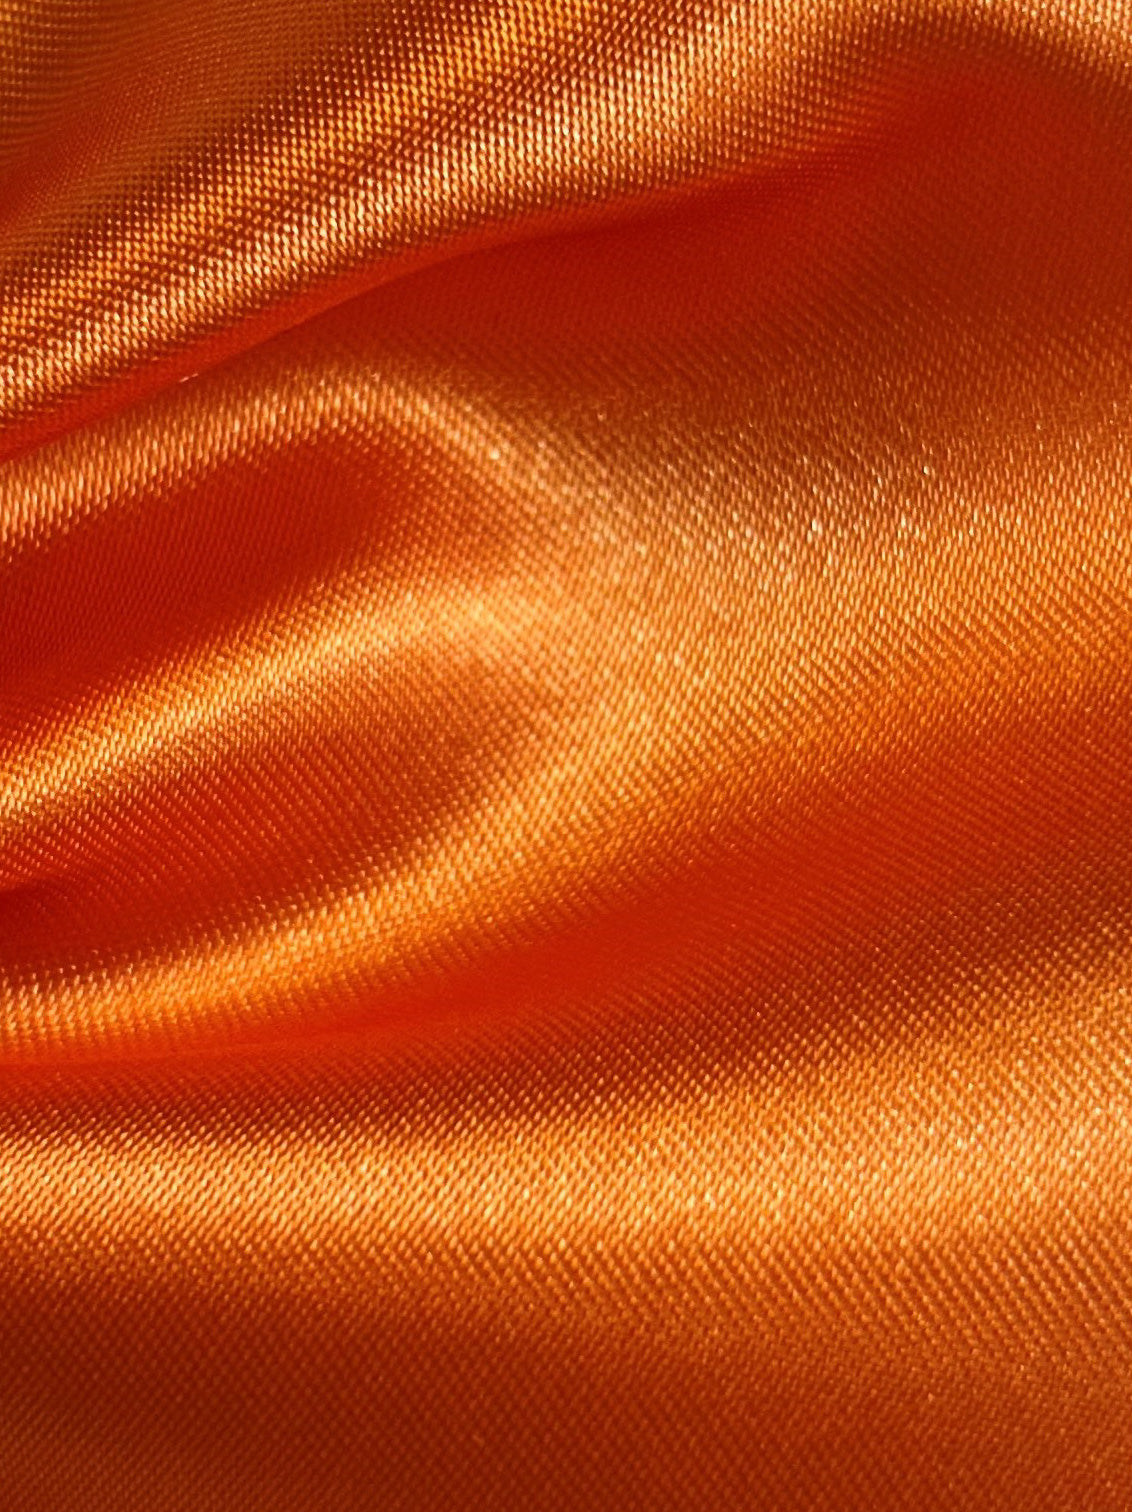 Satin Polyester Orange - Ascot